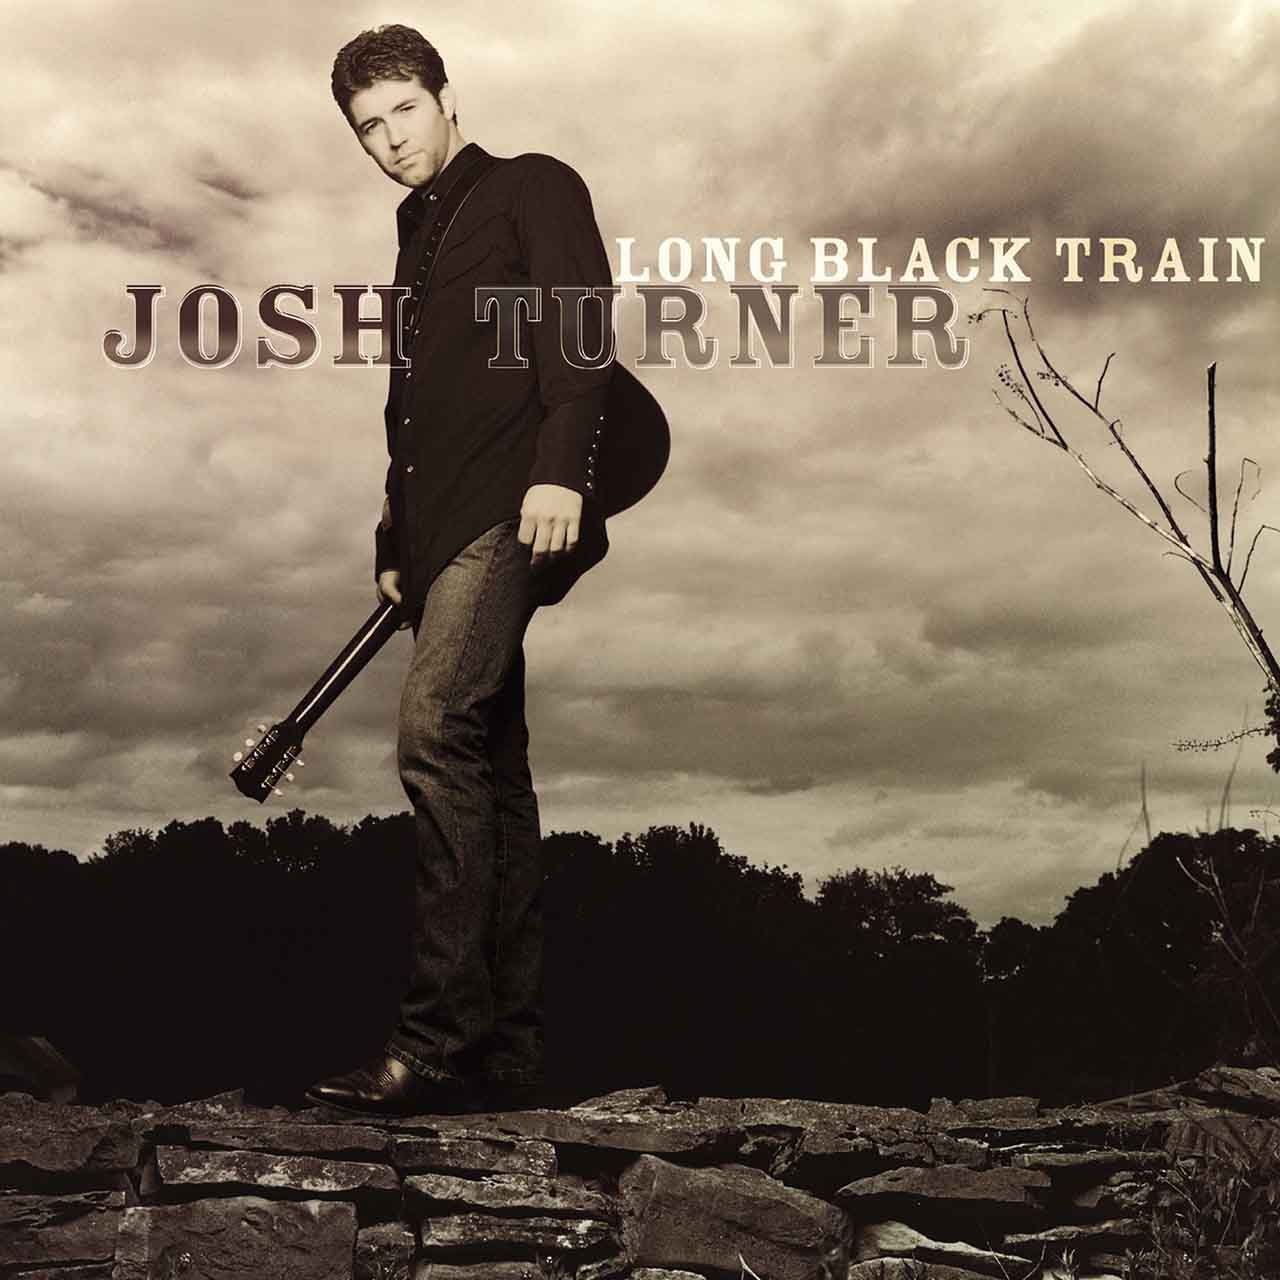 Josh Turner - Long Black Train (Official Music Video) 